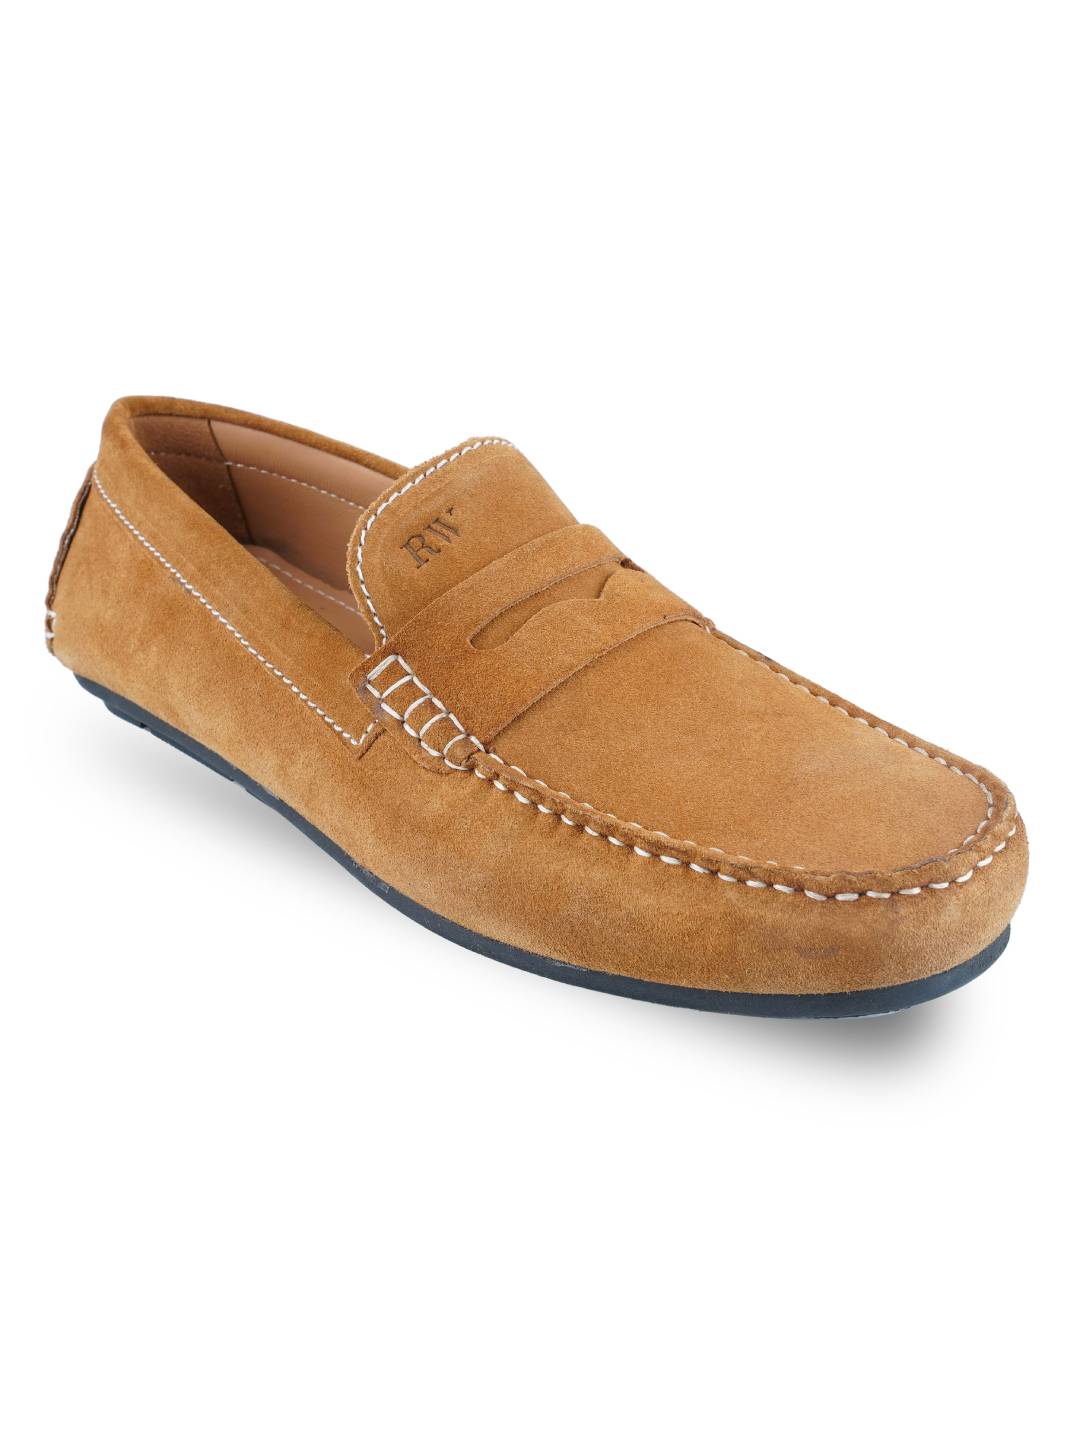 Camel Tan Penny Loafer Moccasins Leather Shoes leather shoes for men |  Rapawalk